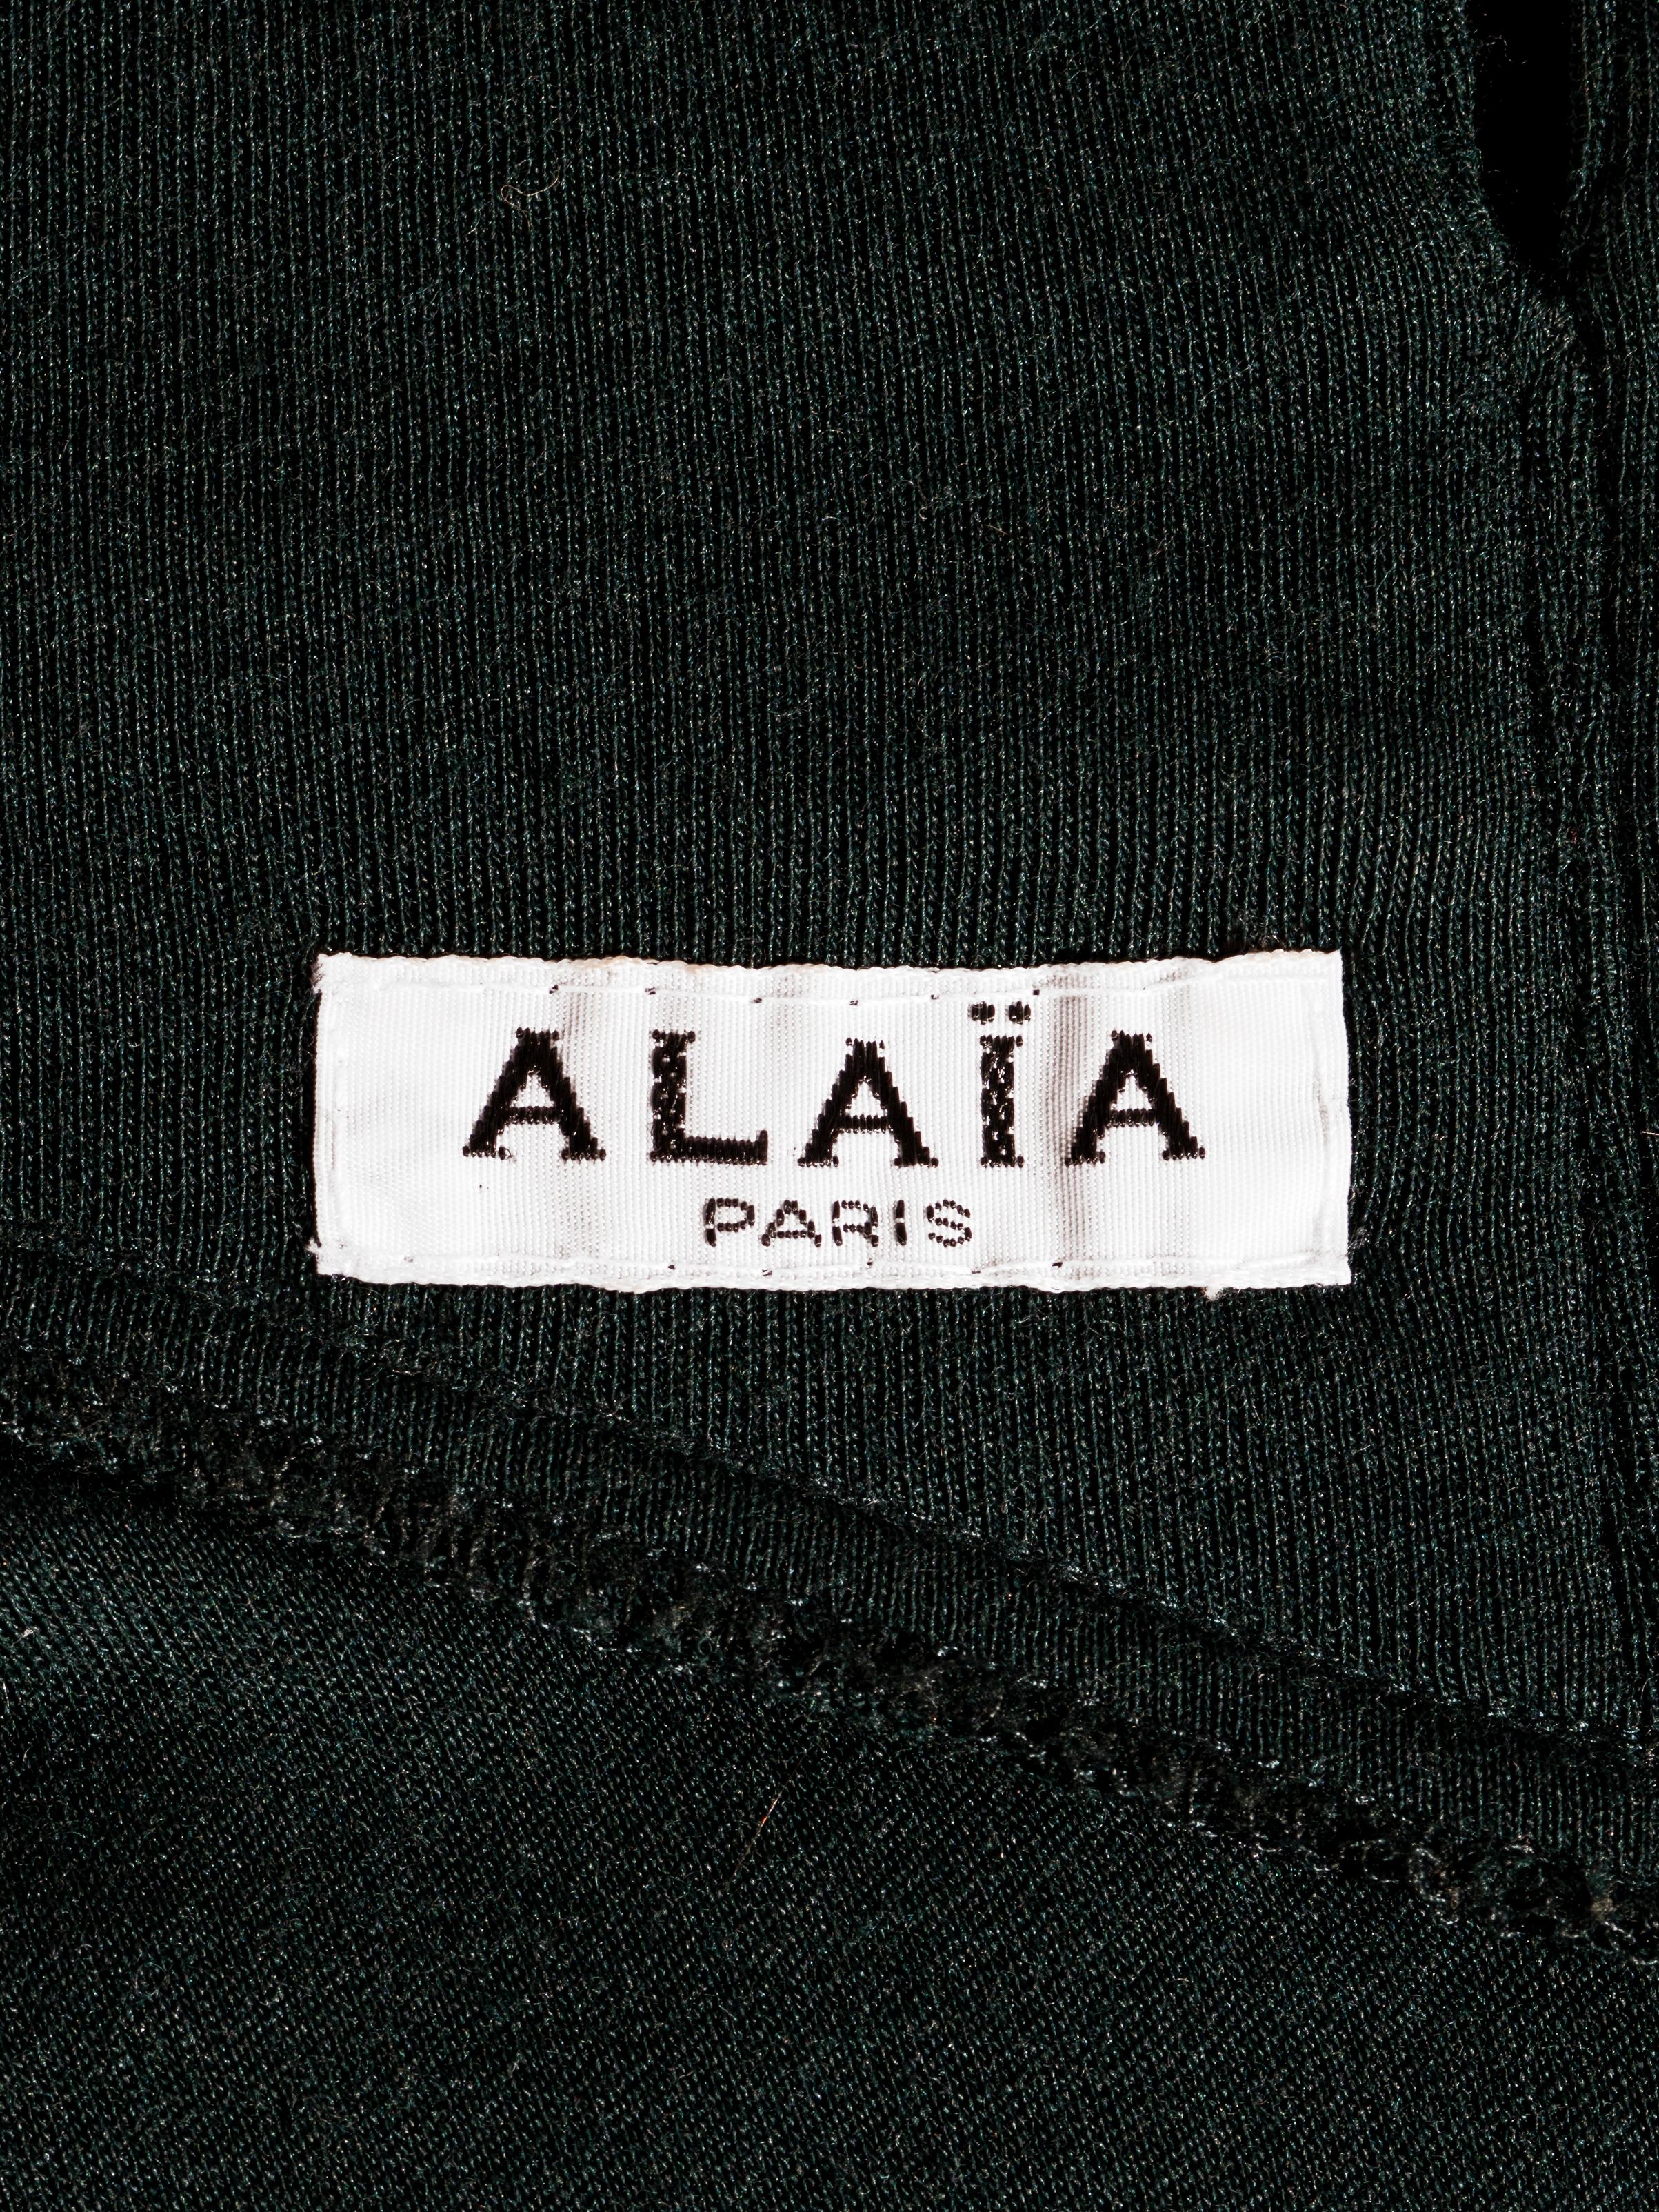 Azzedine Alaïa green and black wool jersey wrap dress, fw 1982 For Sale 3